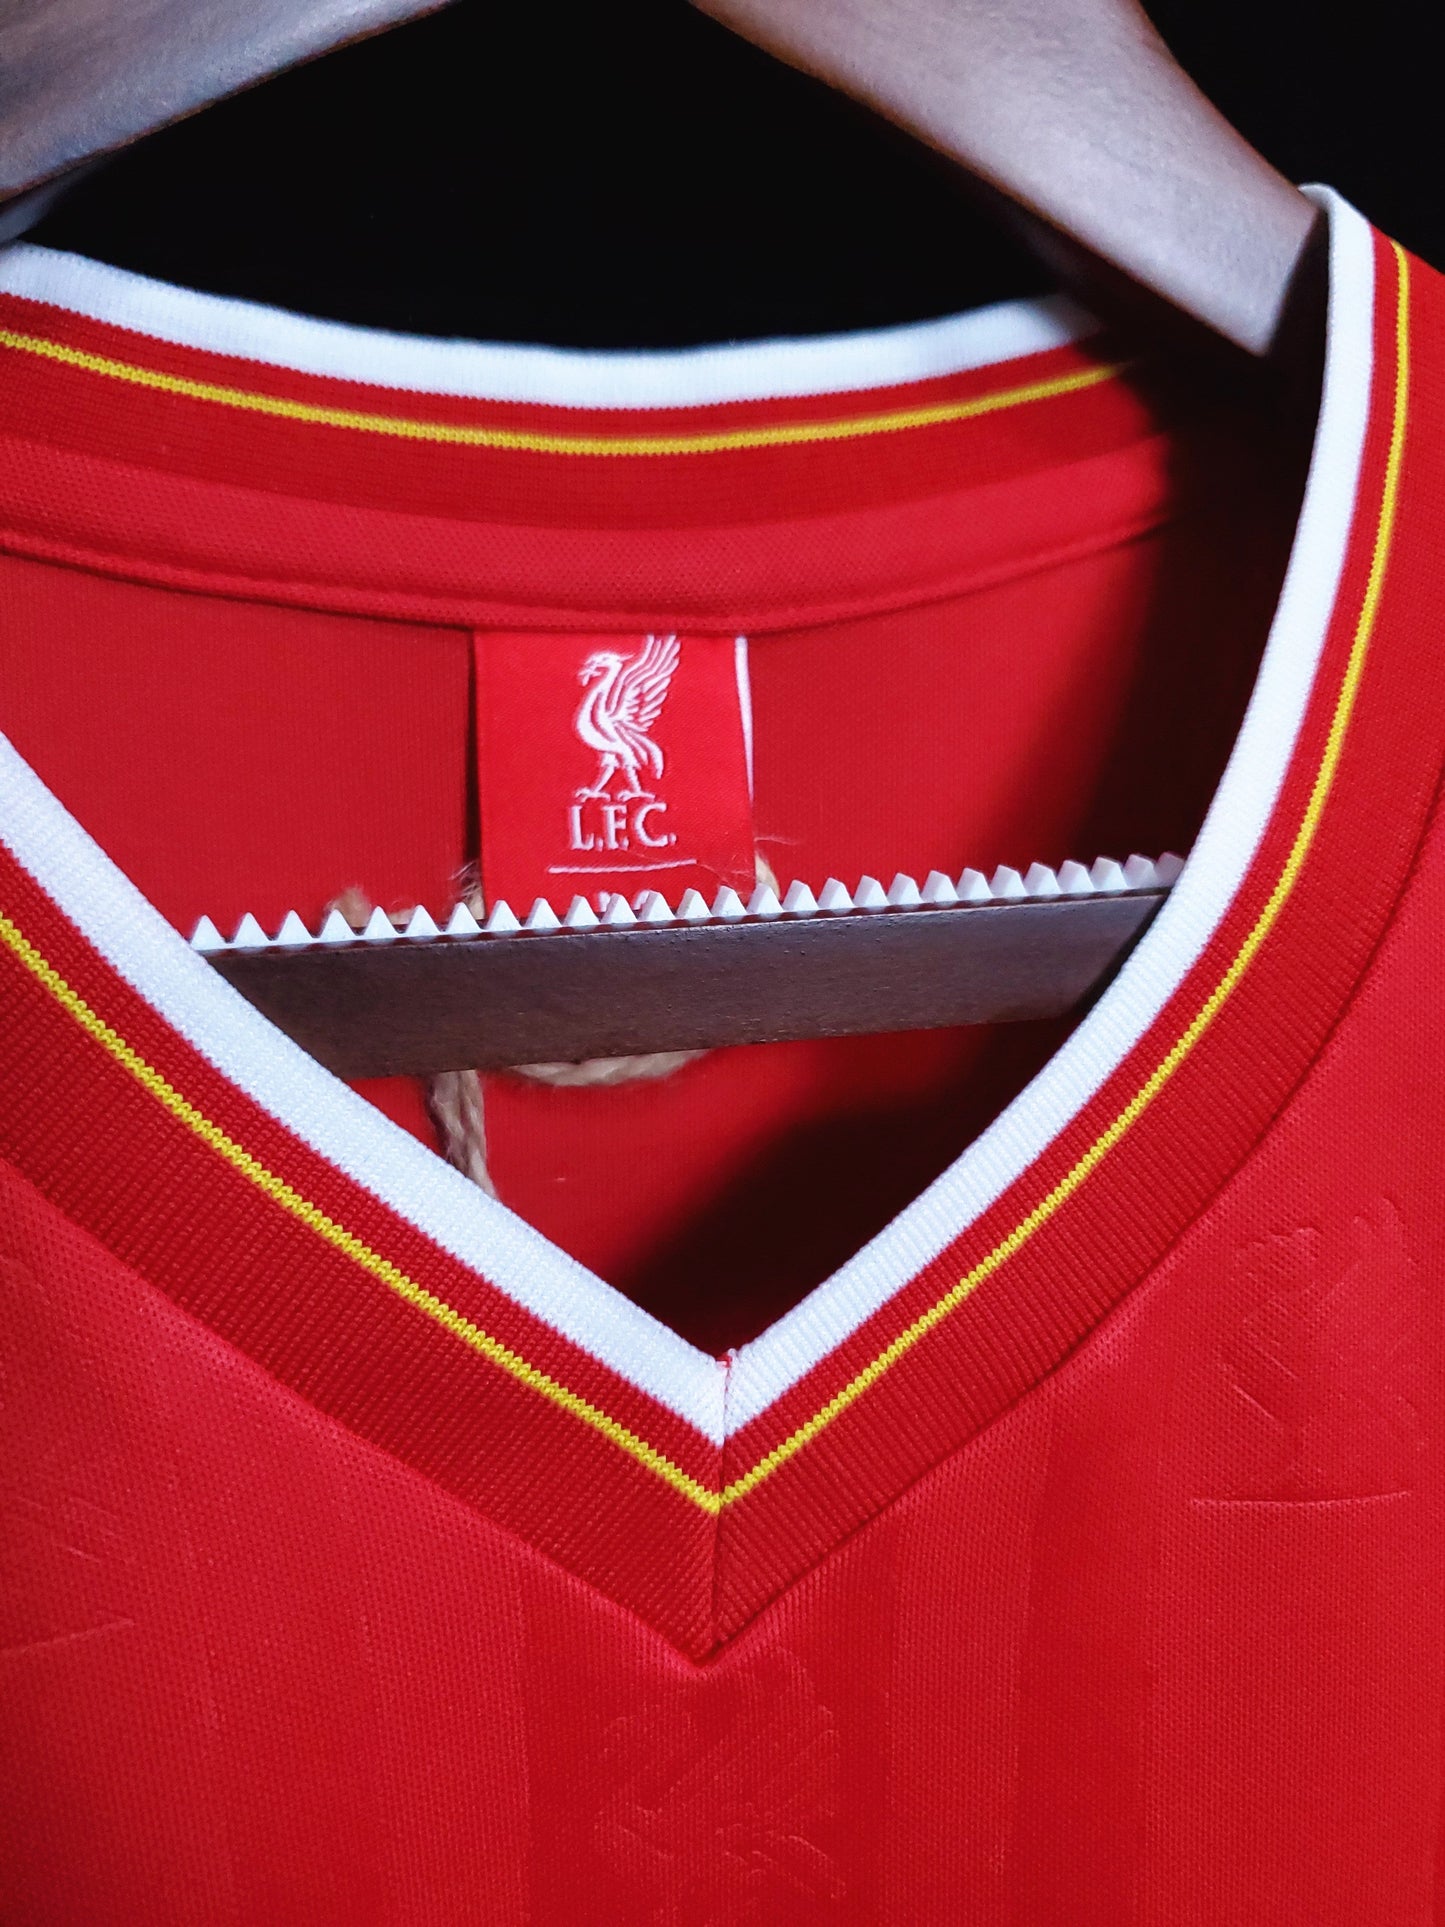 Retro Liverpool 85/86 Home Kit